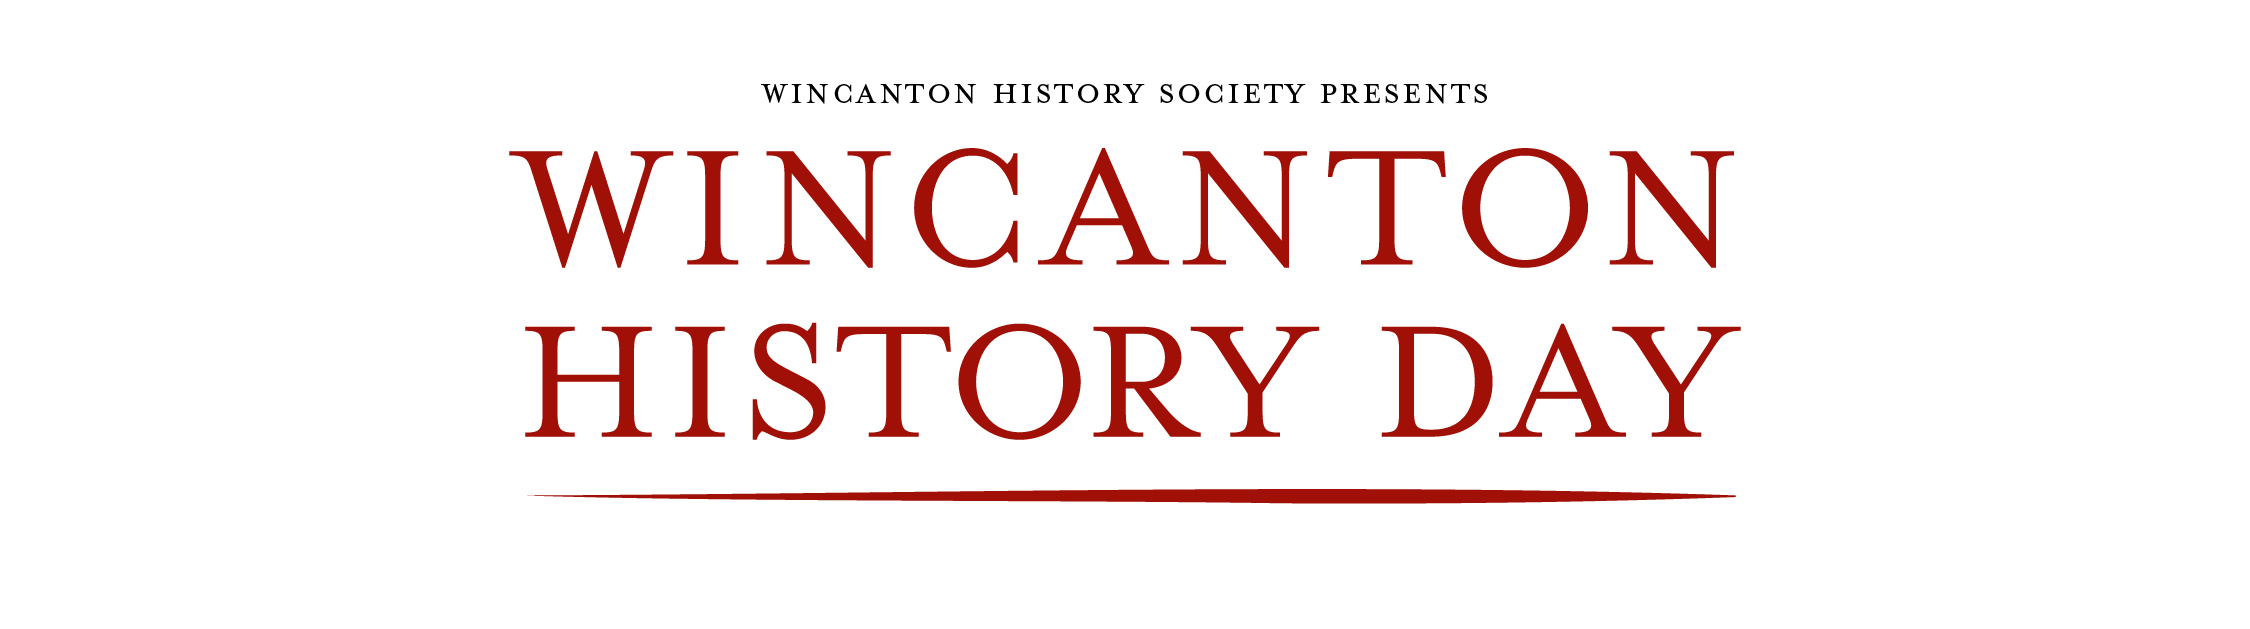 Wincanton History Day